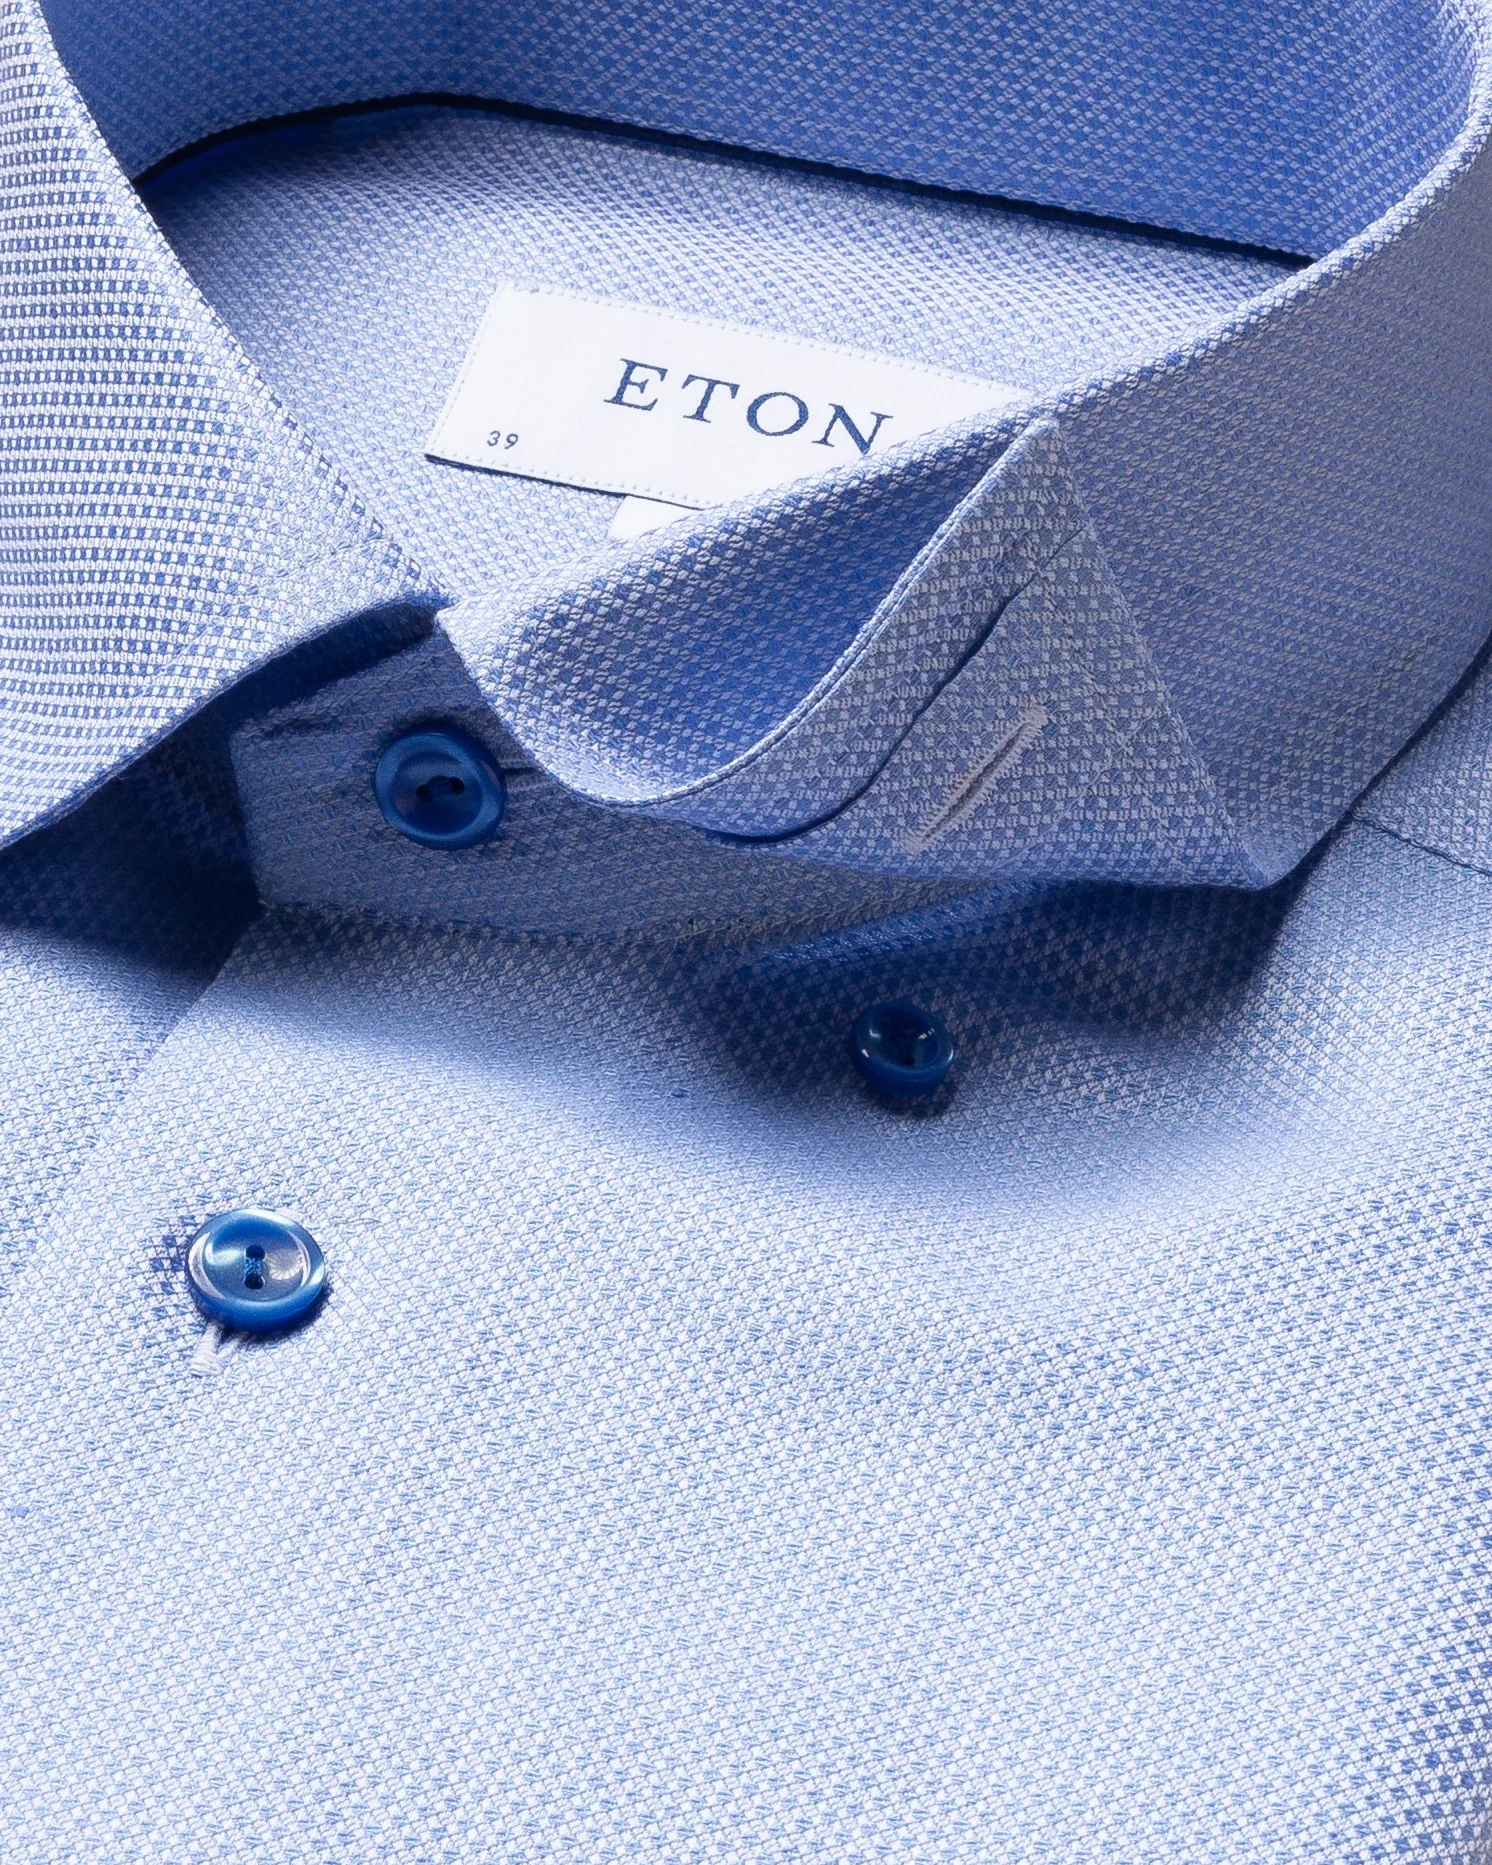 Eton - blue cotton linen shirt